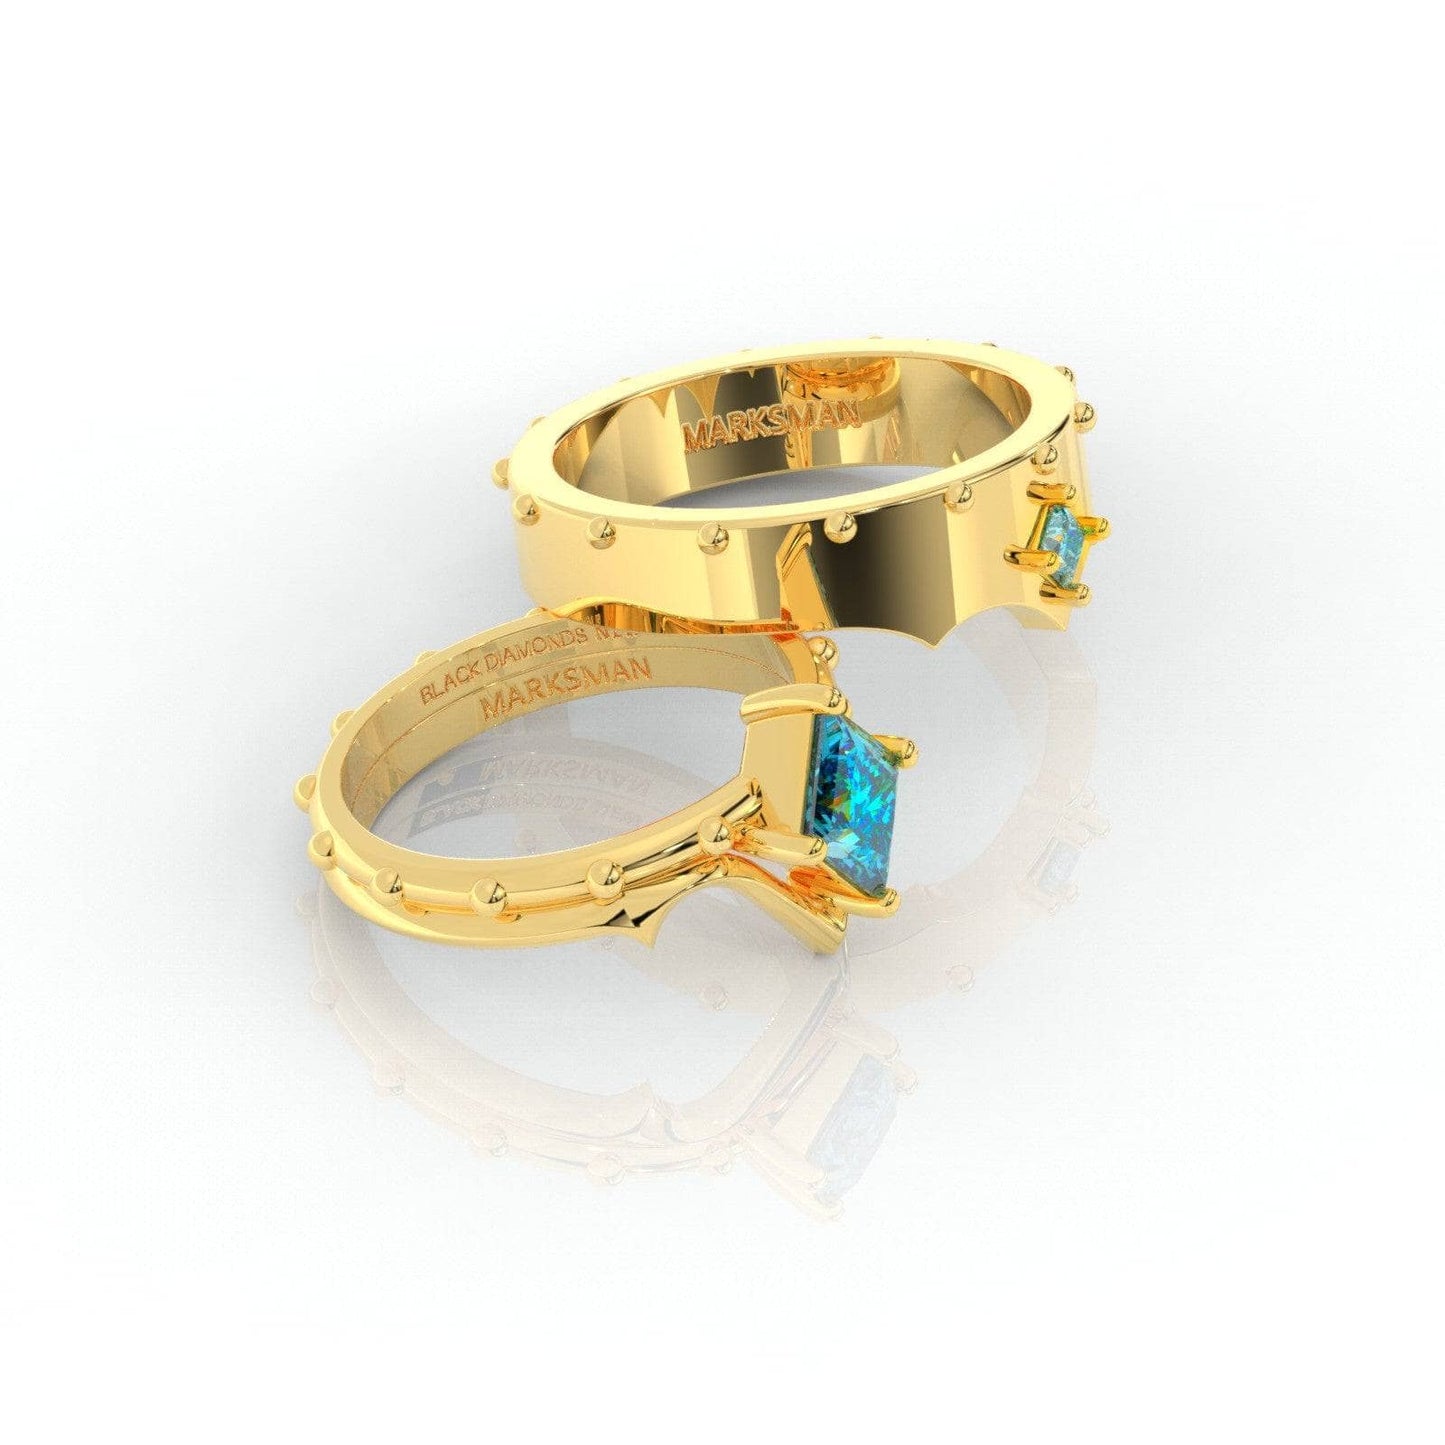 Marksman's Ring Set (Women)- 14k Yellow Gold Video Game Inspired Rings - Black Diamonds New York